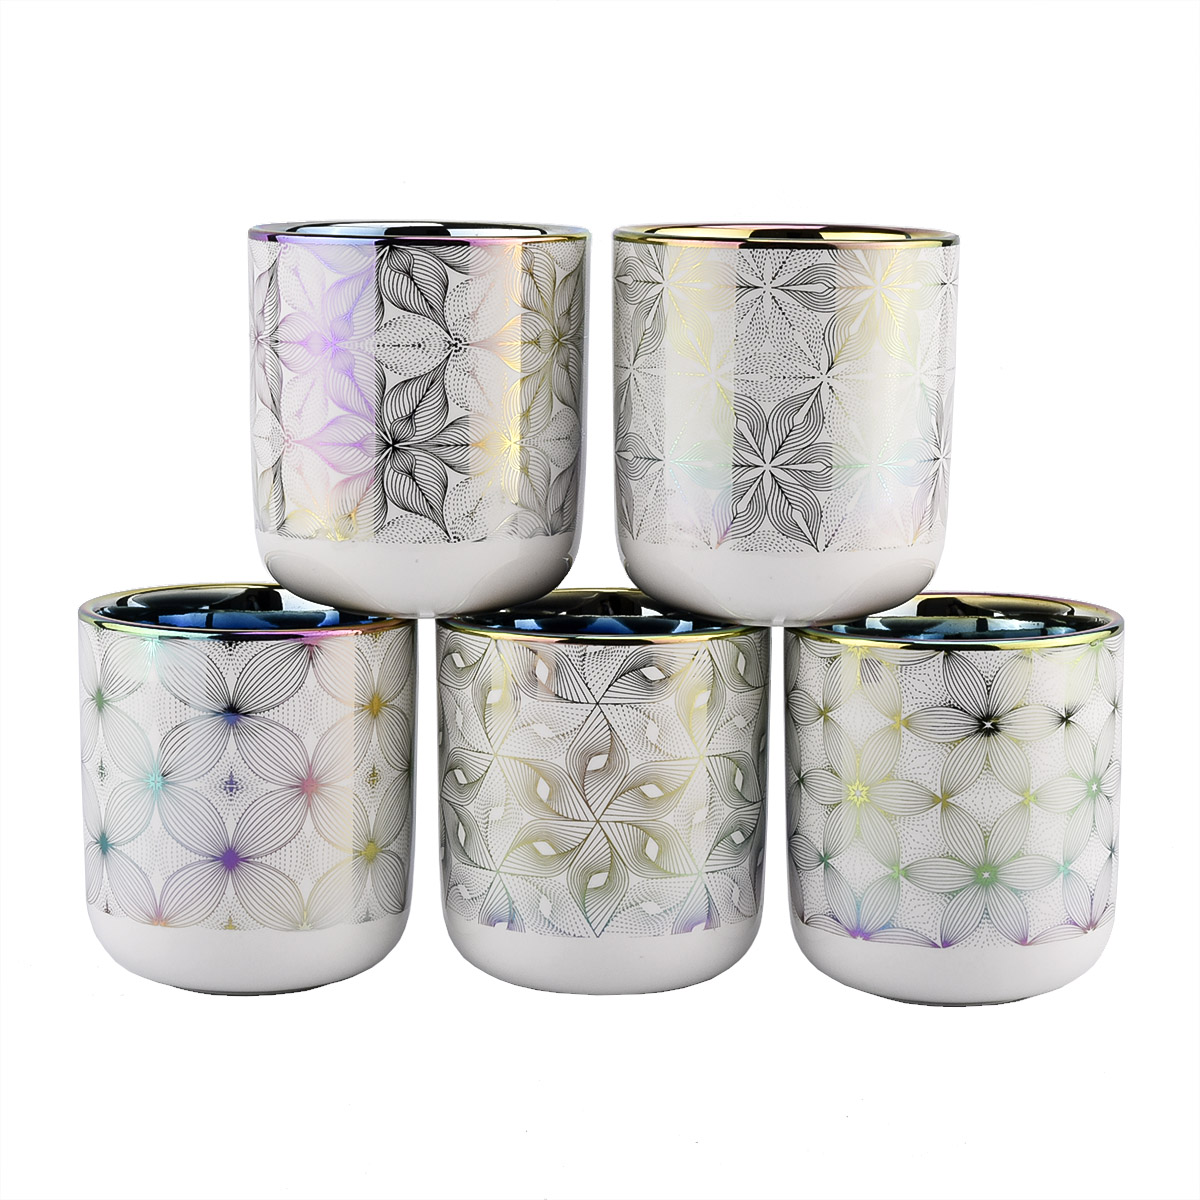 luxury iridescent ceramic candle jar with printing artwork